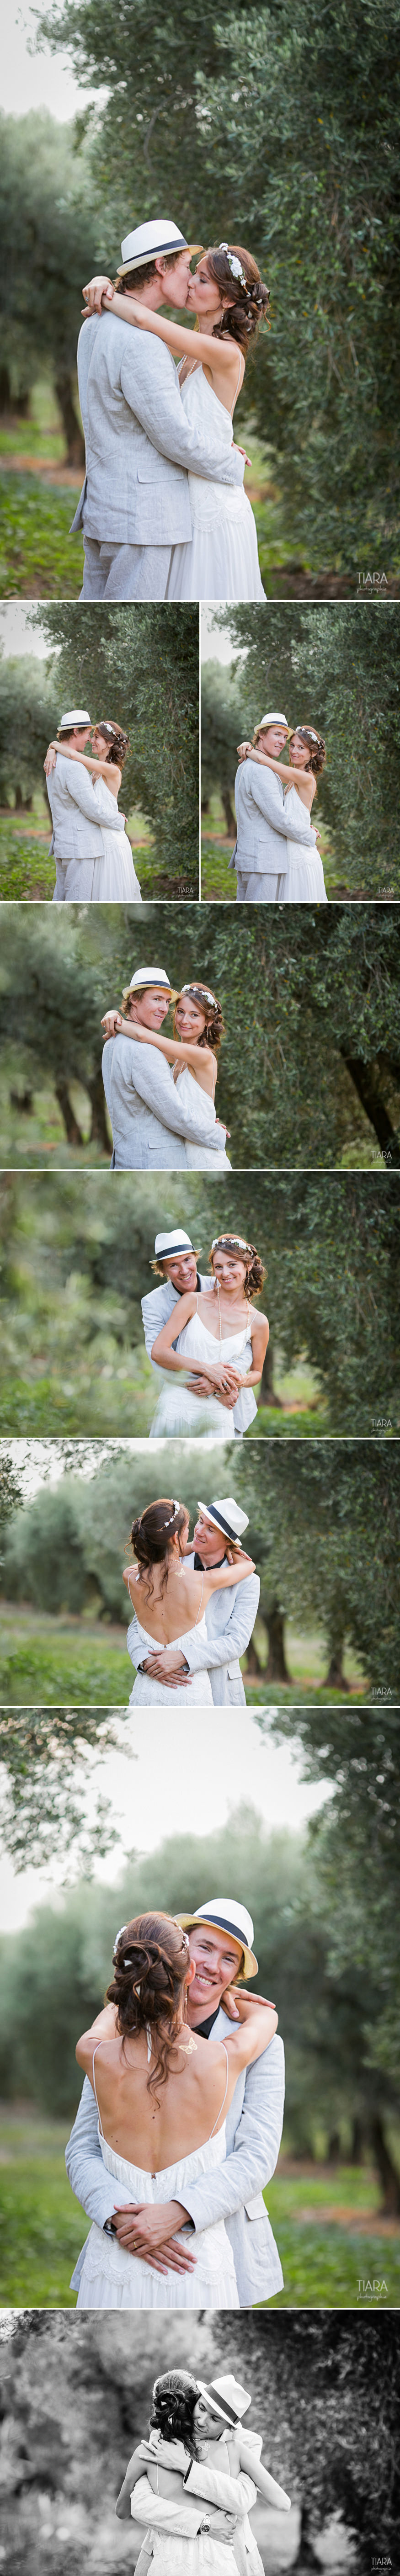 wedding photographe in provence